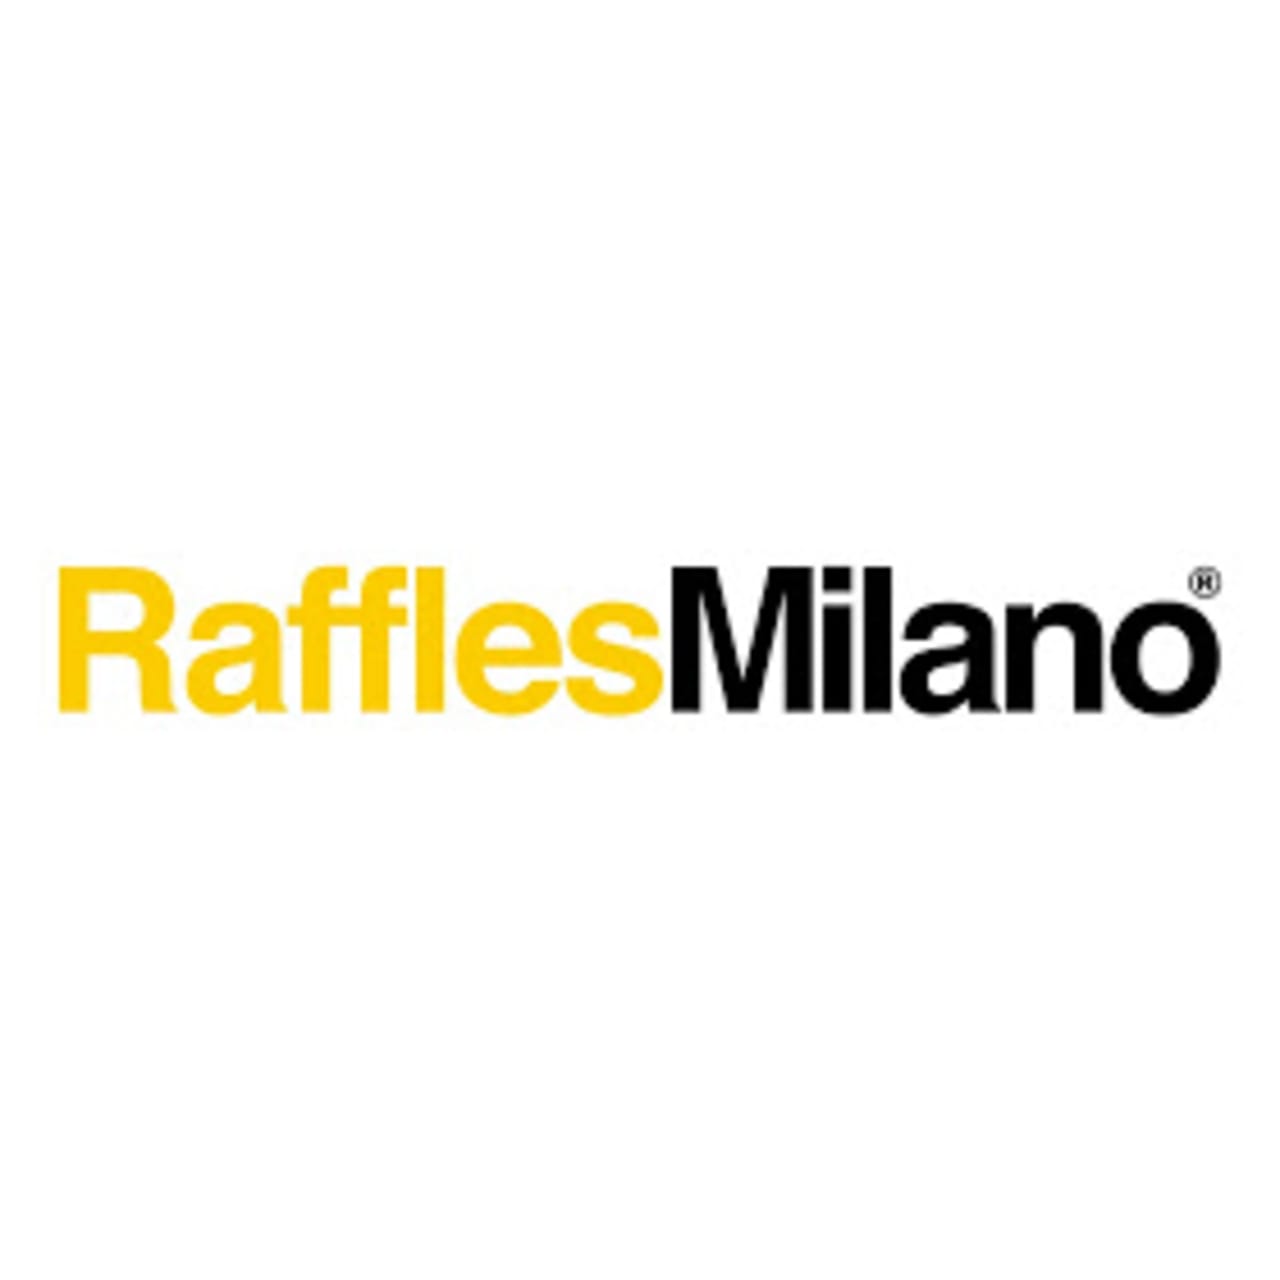 Raffles Milan - International Fashion and Design School 시각 디자인 및 커뮤니케이션 석사